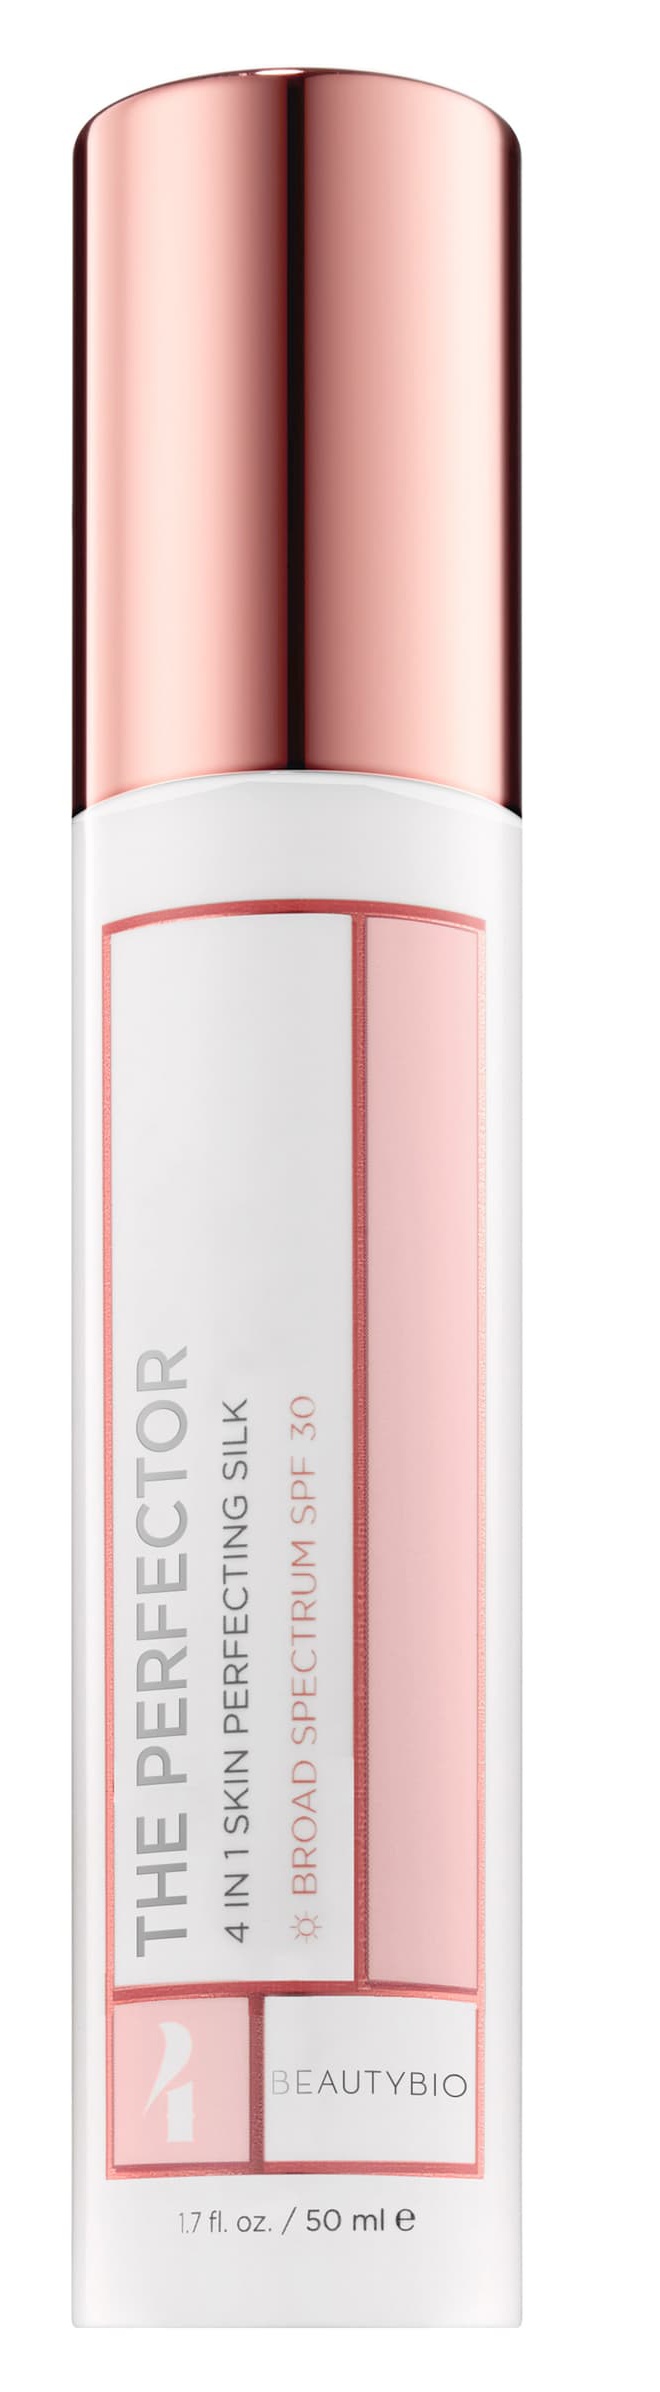 Beautybio The Perfector 4-In-1 Skin Perfecting Silk Spf 30